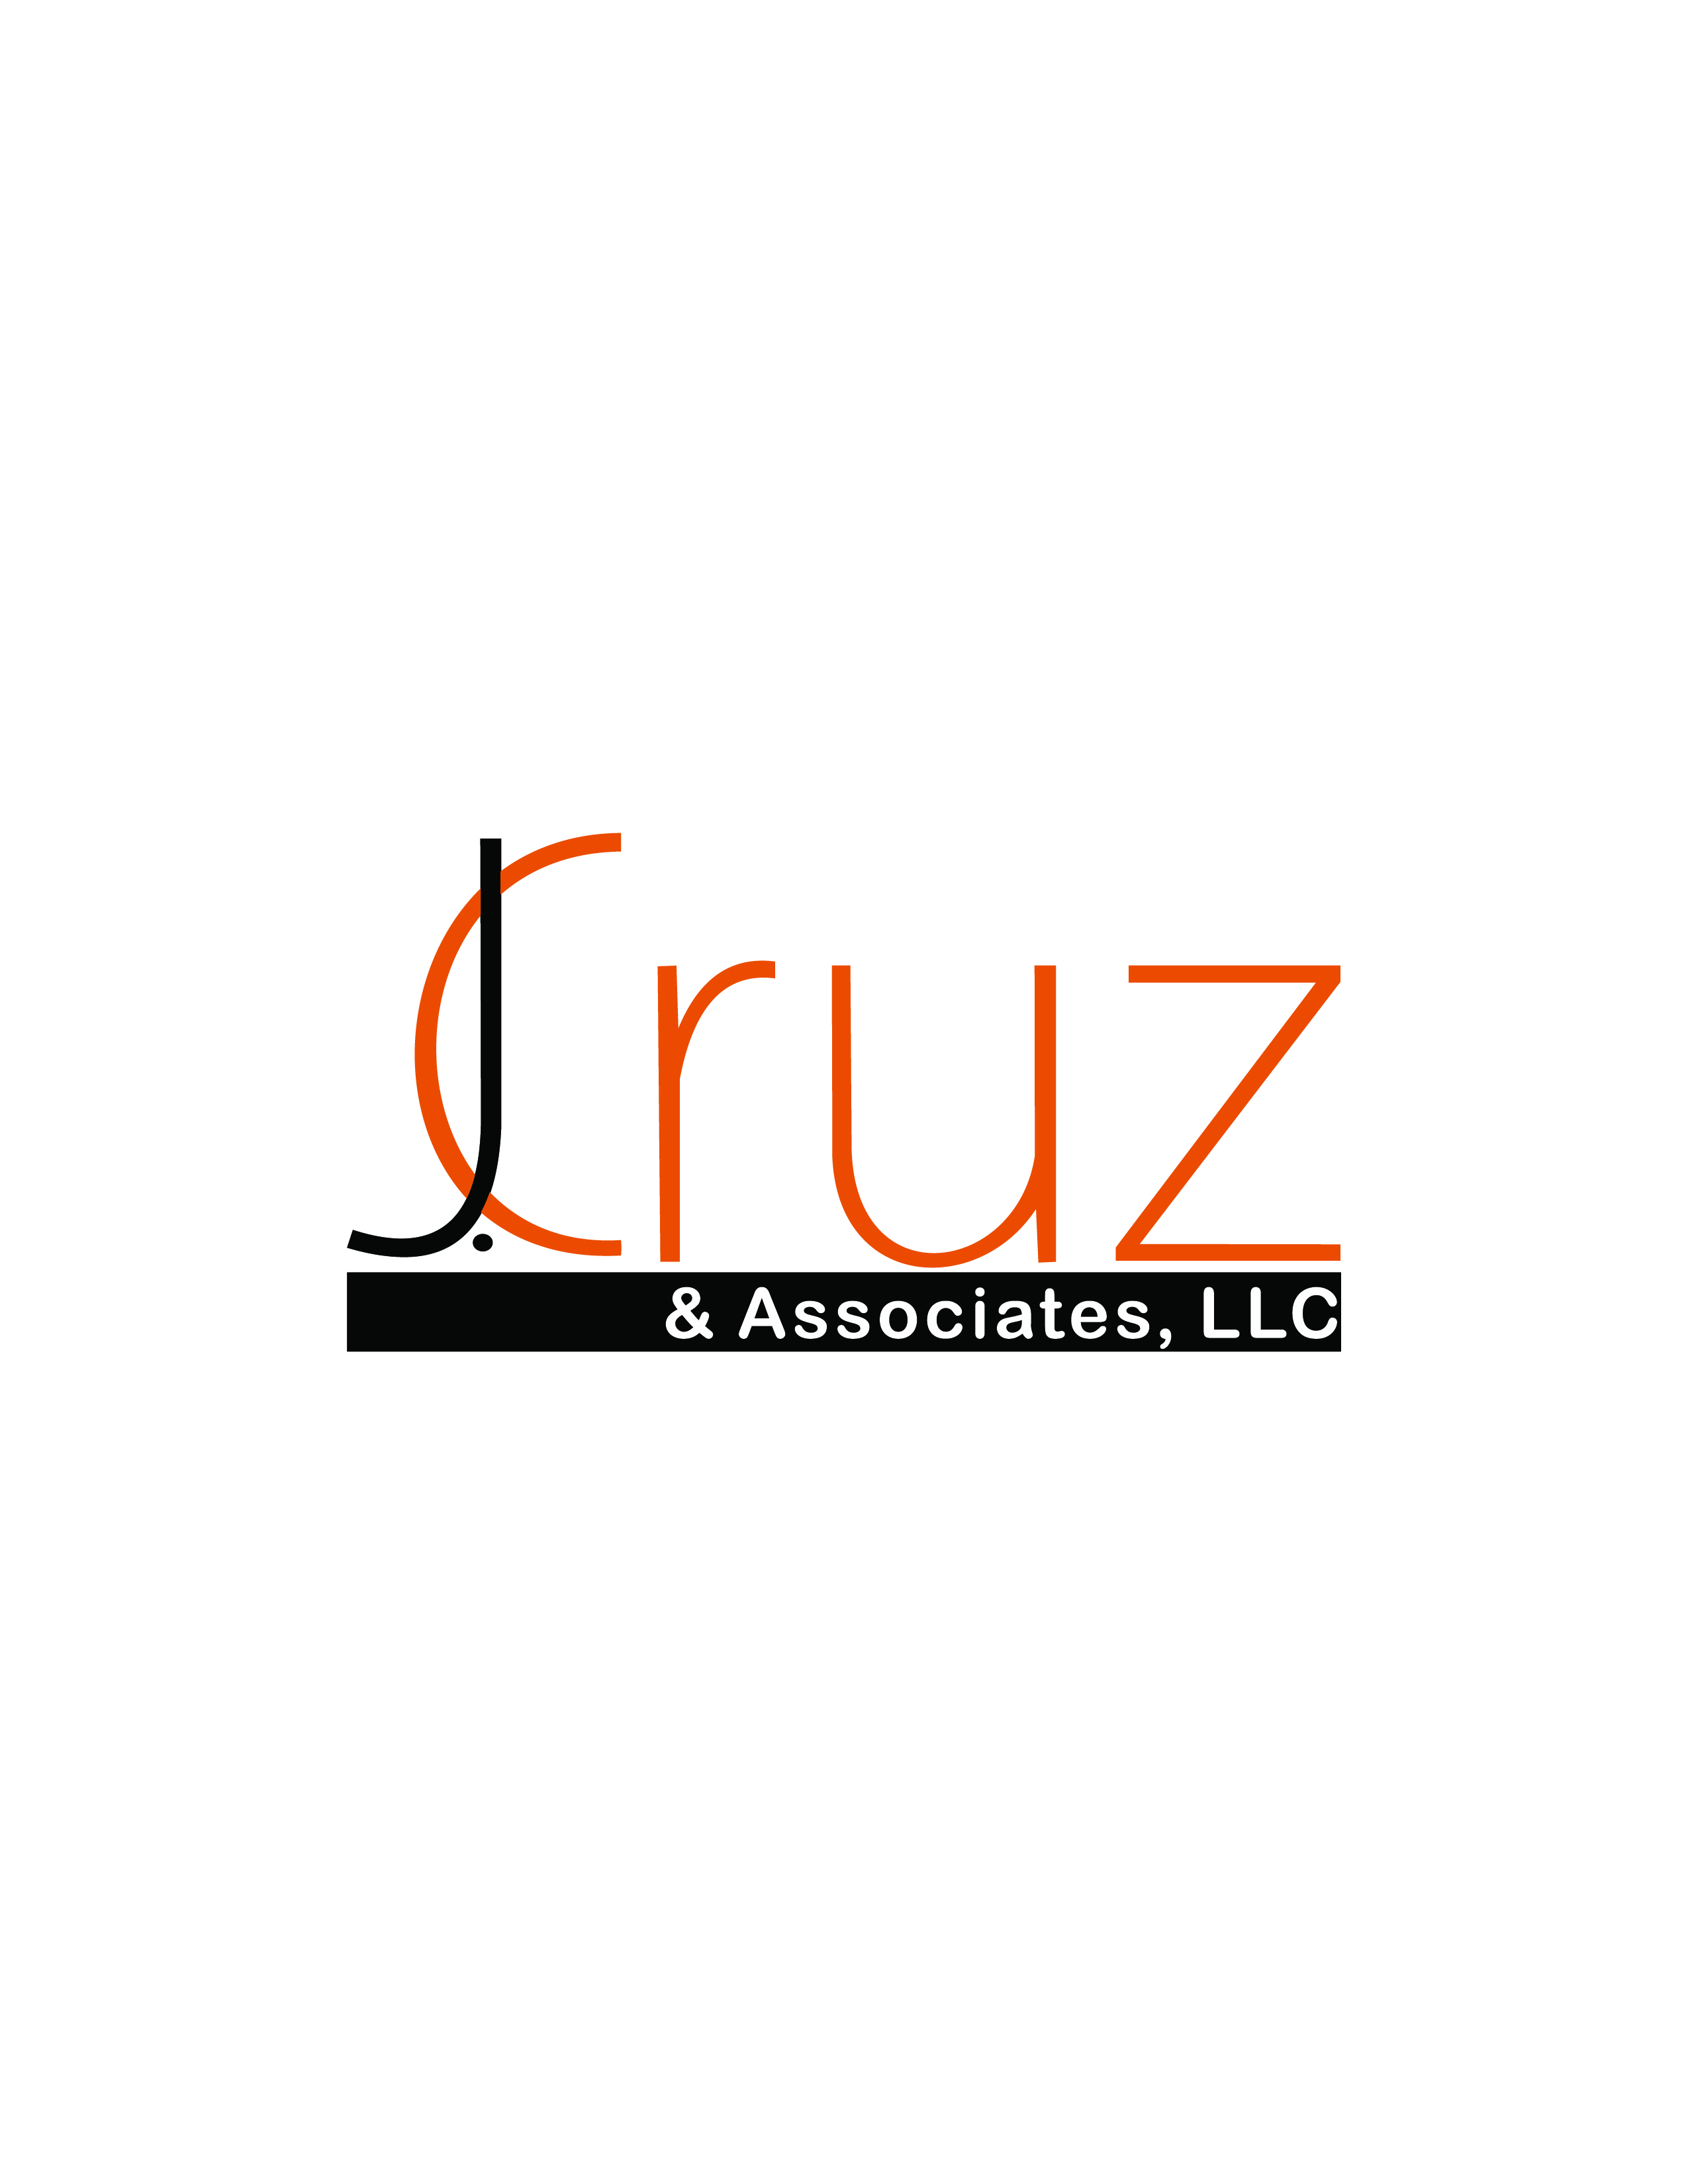 J. Cruz & Associates, LLC logo